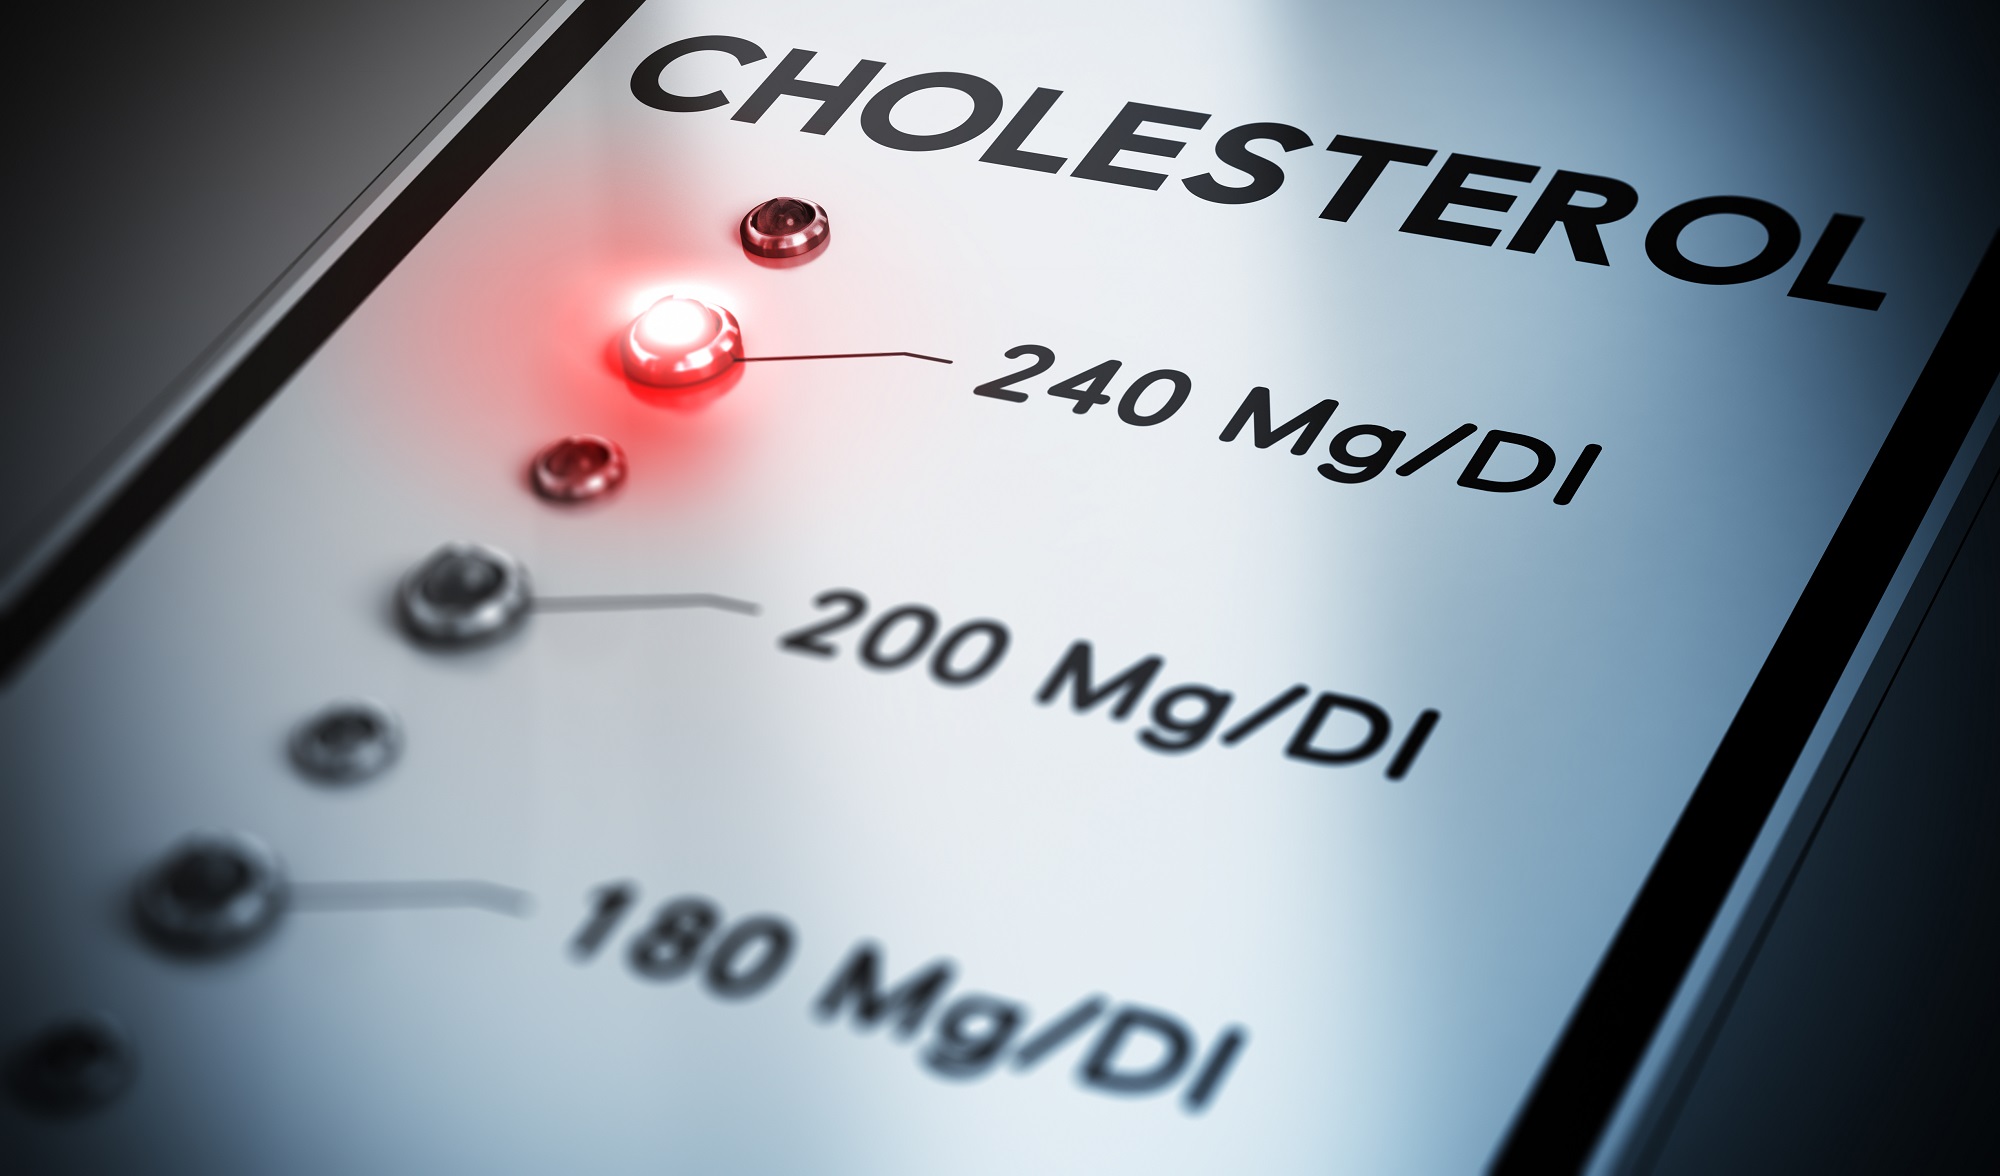 Symptoms of High Cholesterol